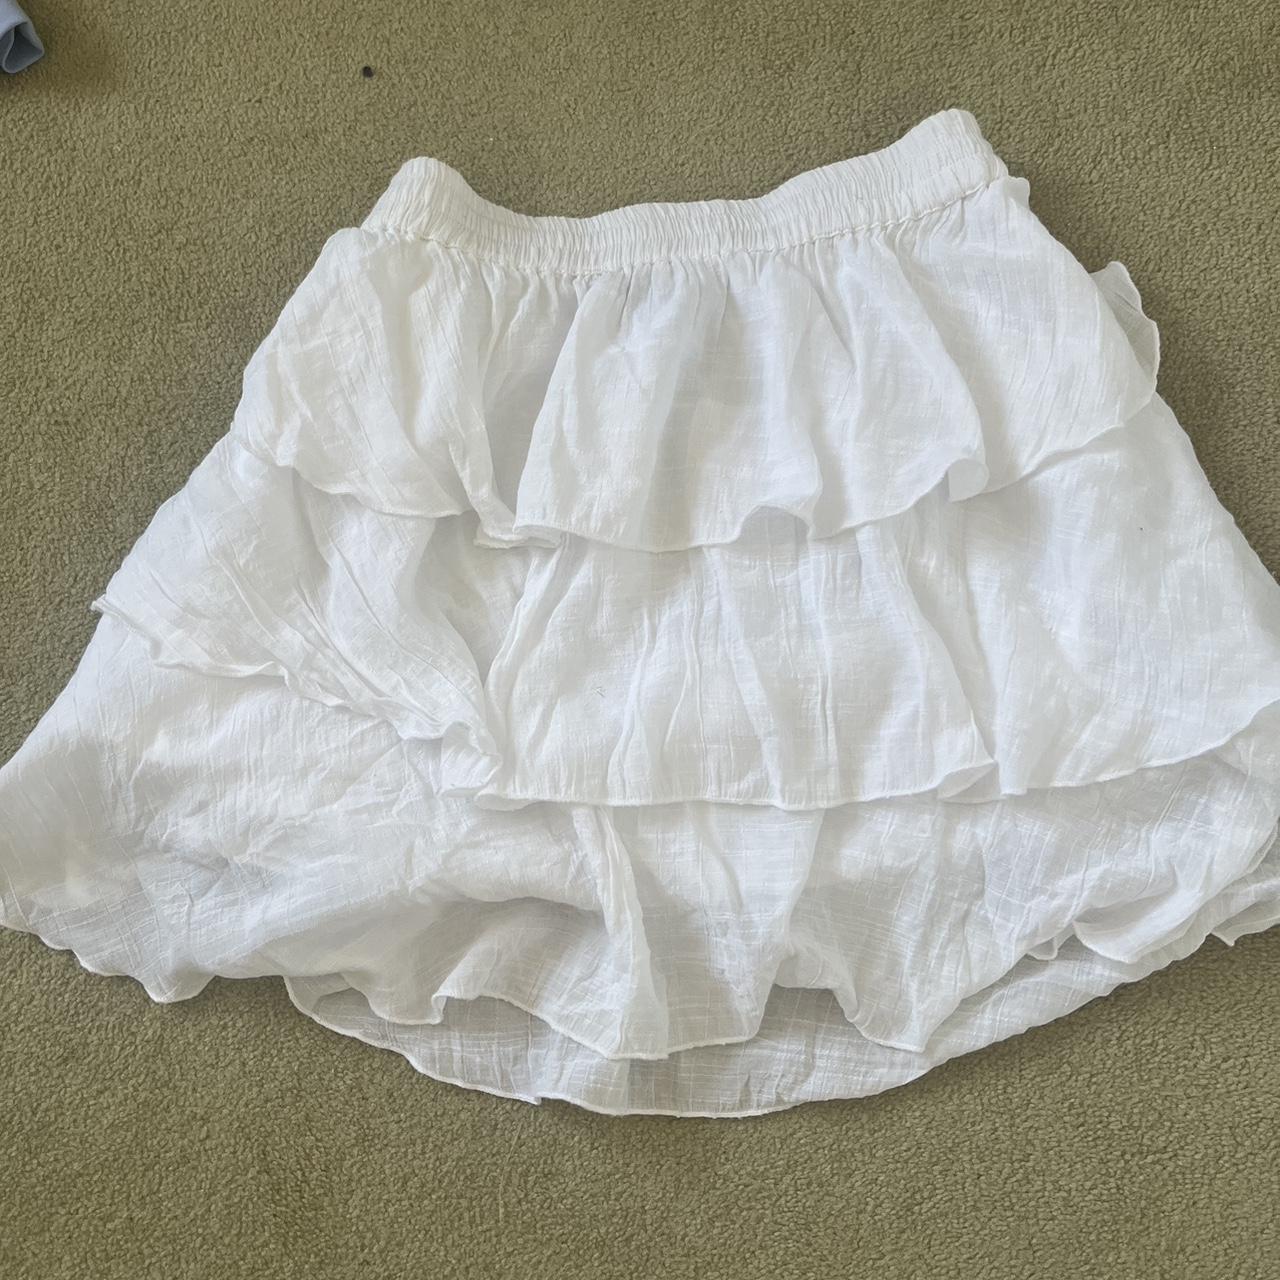 Layered white linen rara mini skirt with elasticated... - Depop